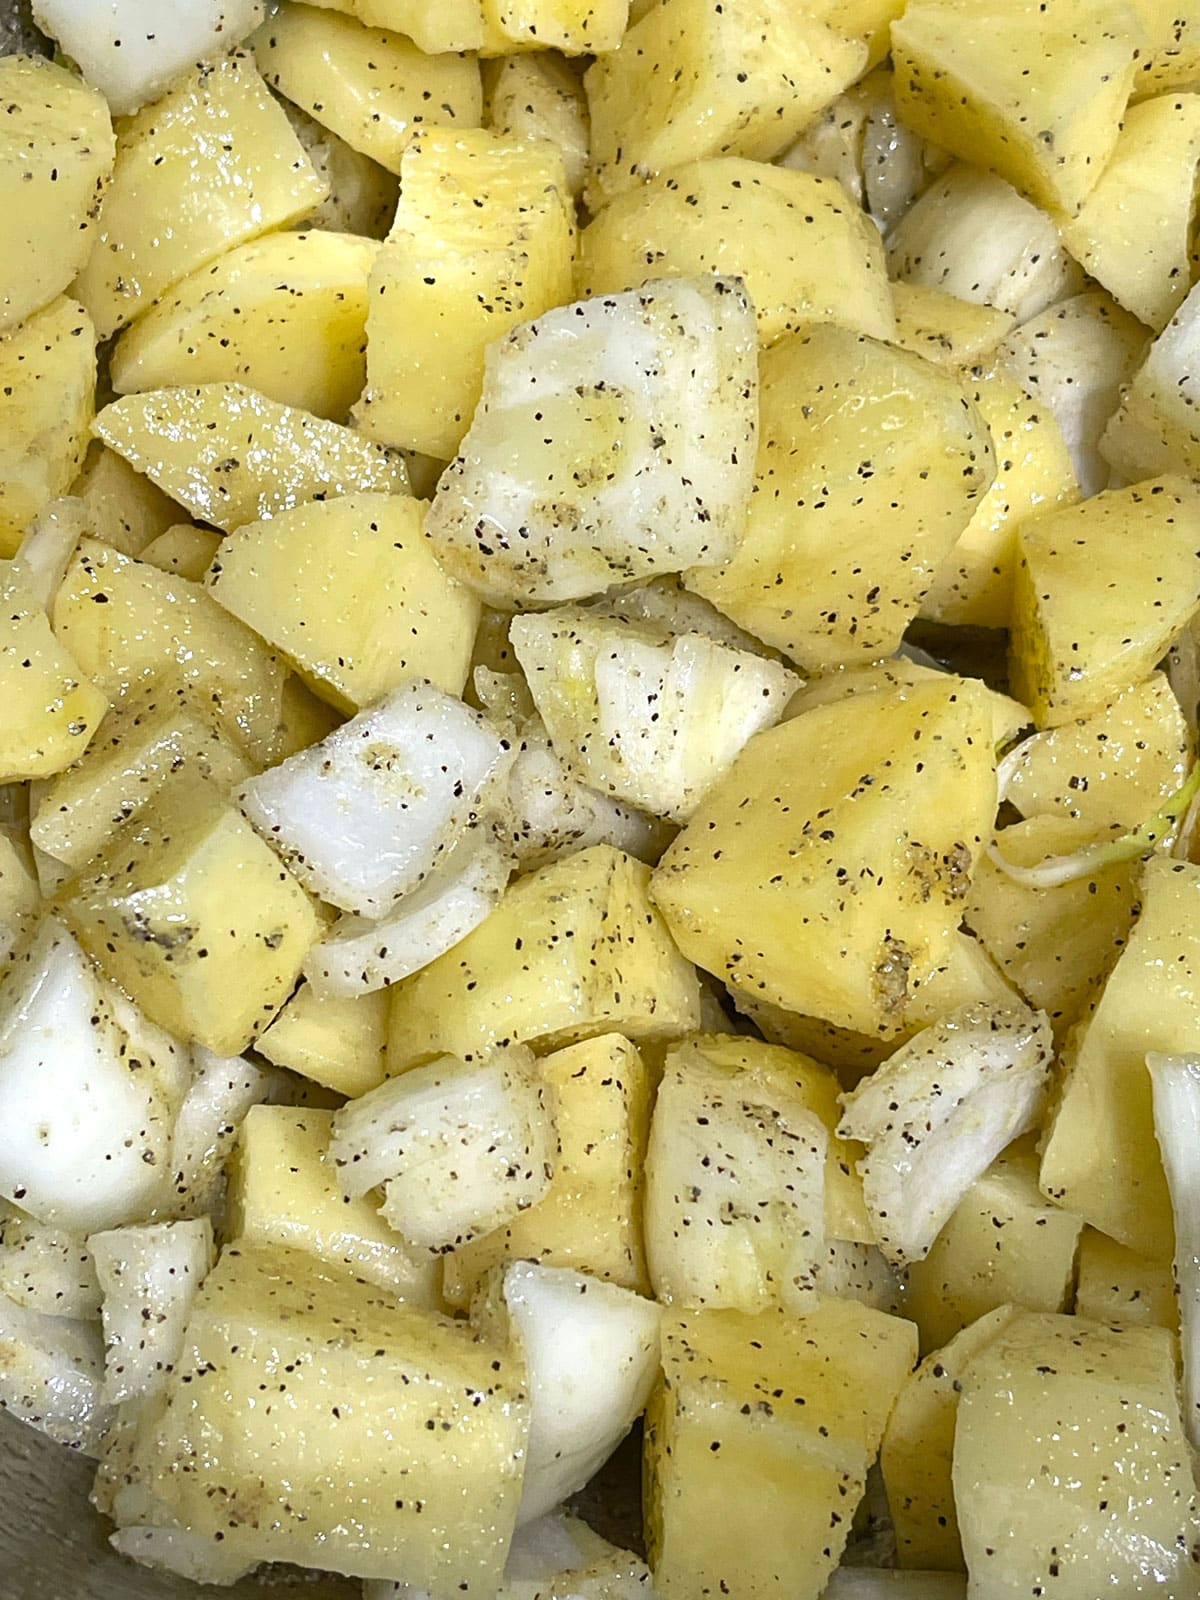 seasoned potatoes and onions